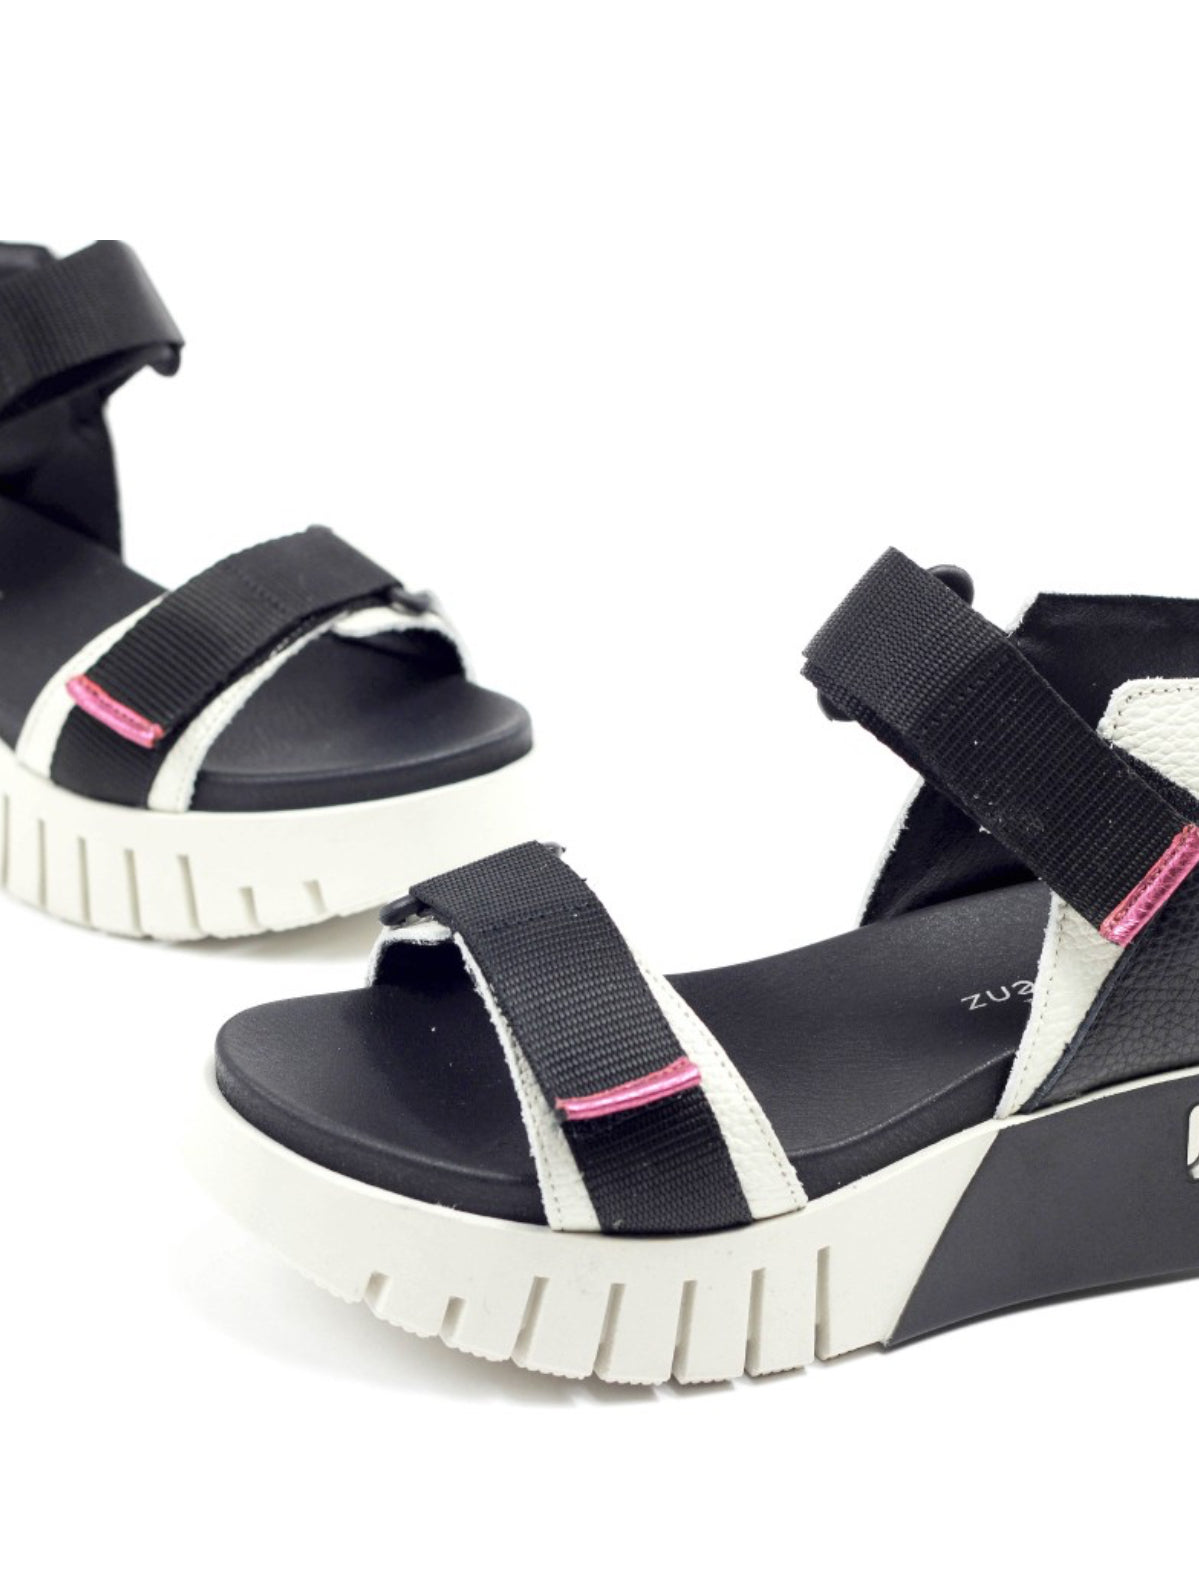 Jose Saenz - 4201 Black and Cream Gladiator Sandal